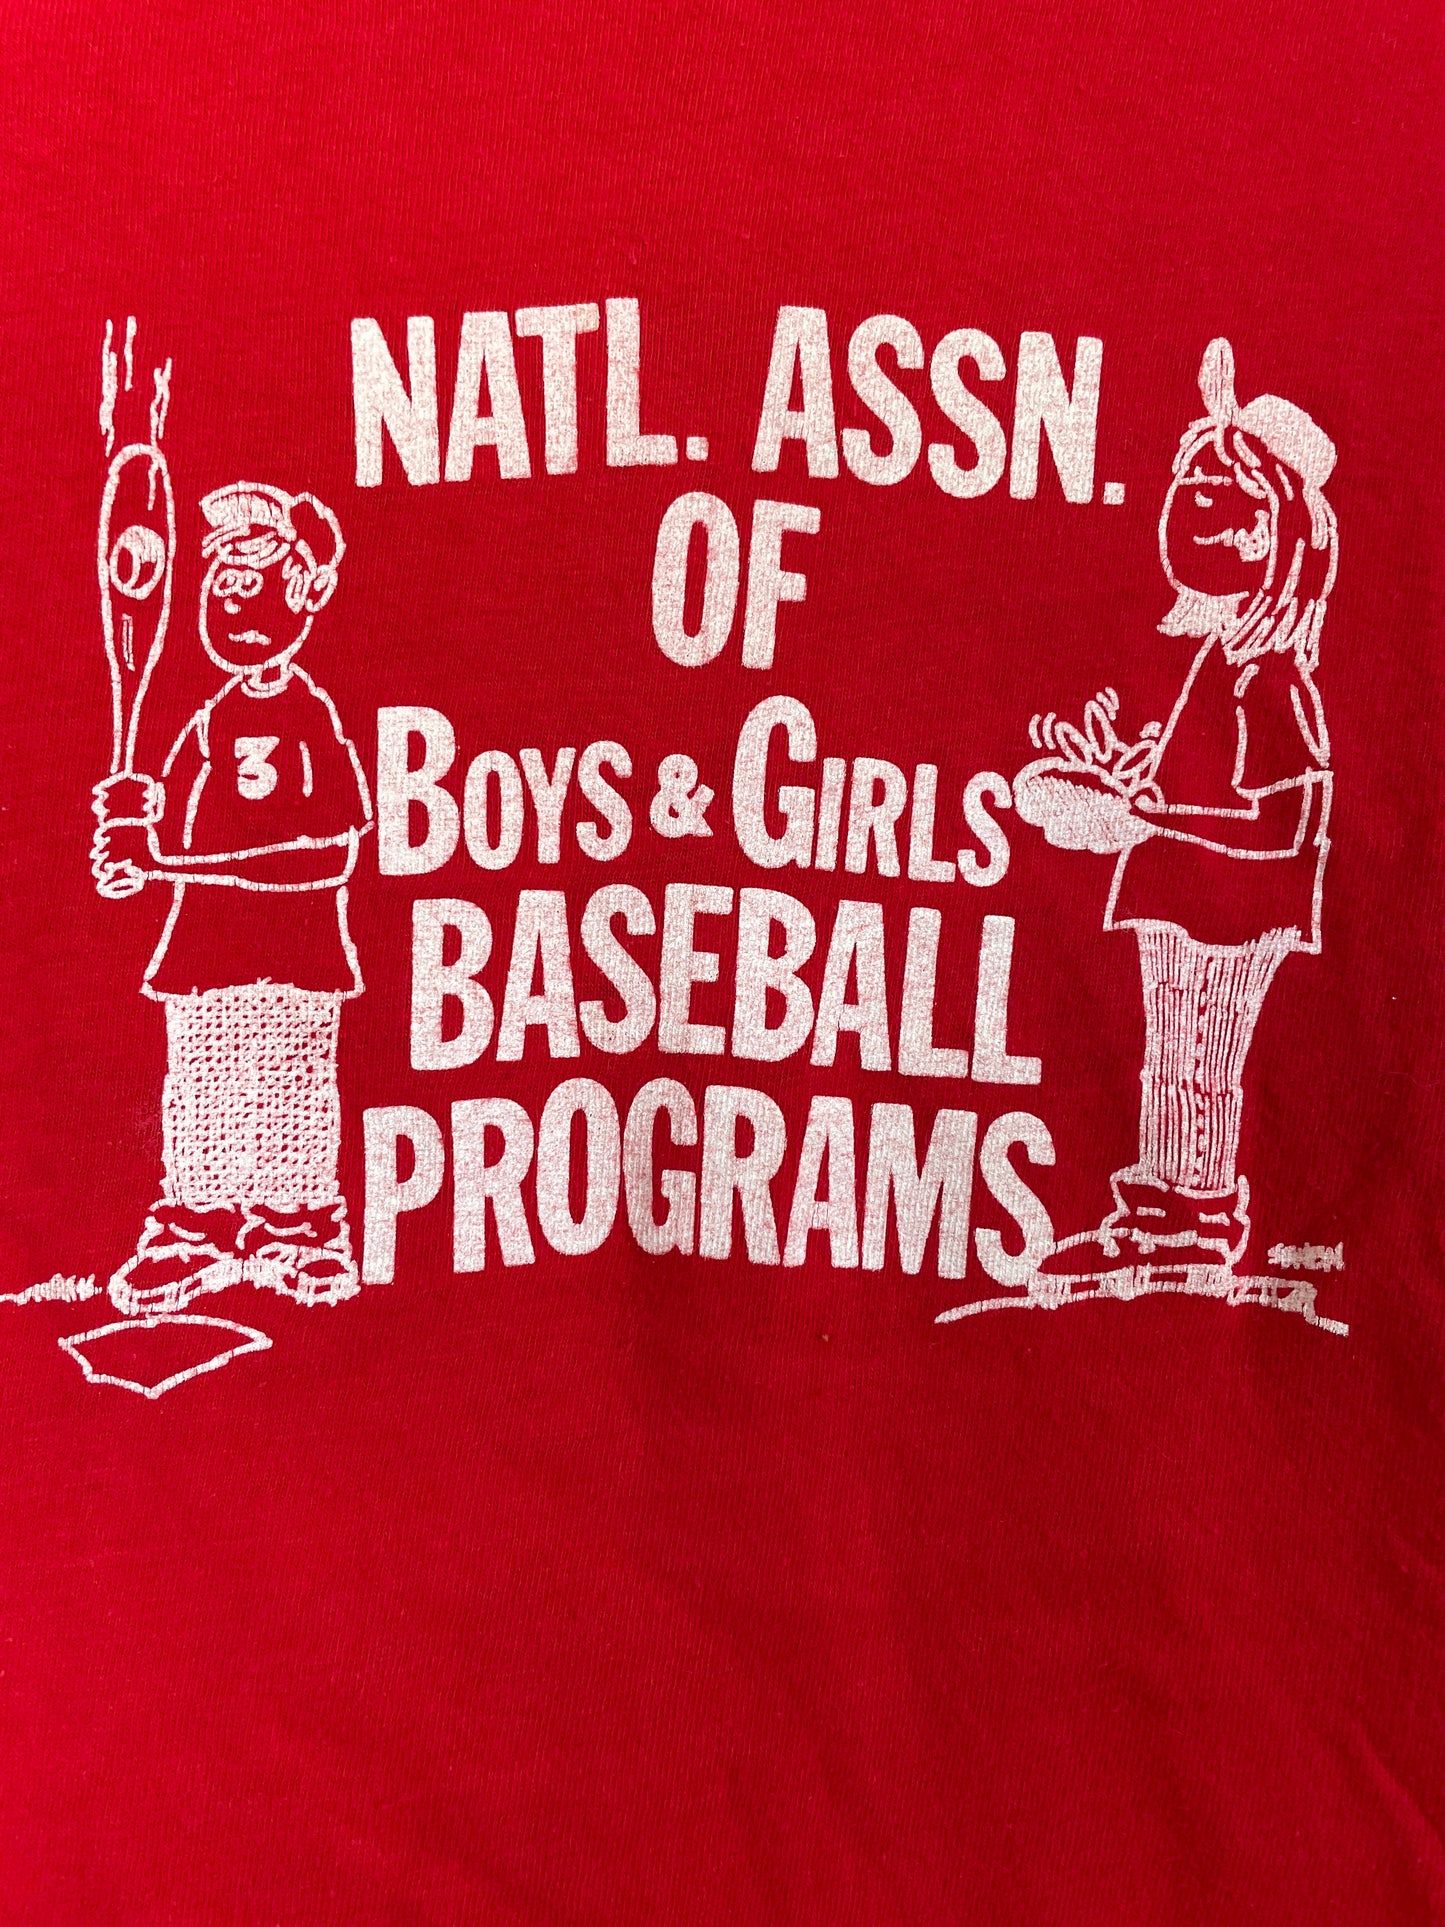 70s Natl. Assn. Of Boys & Girls Baseball Programs Tee